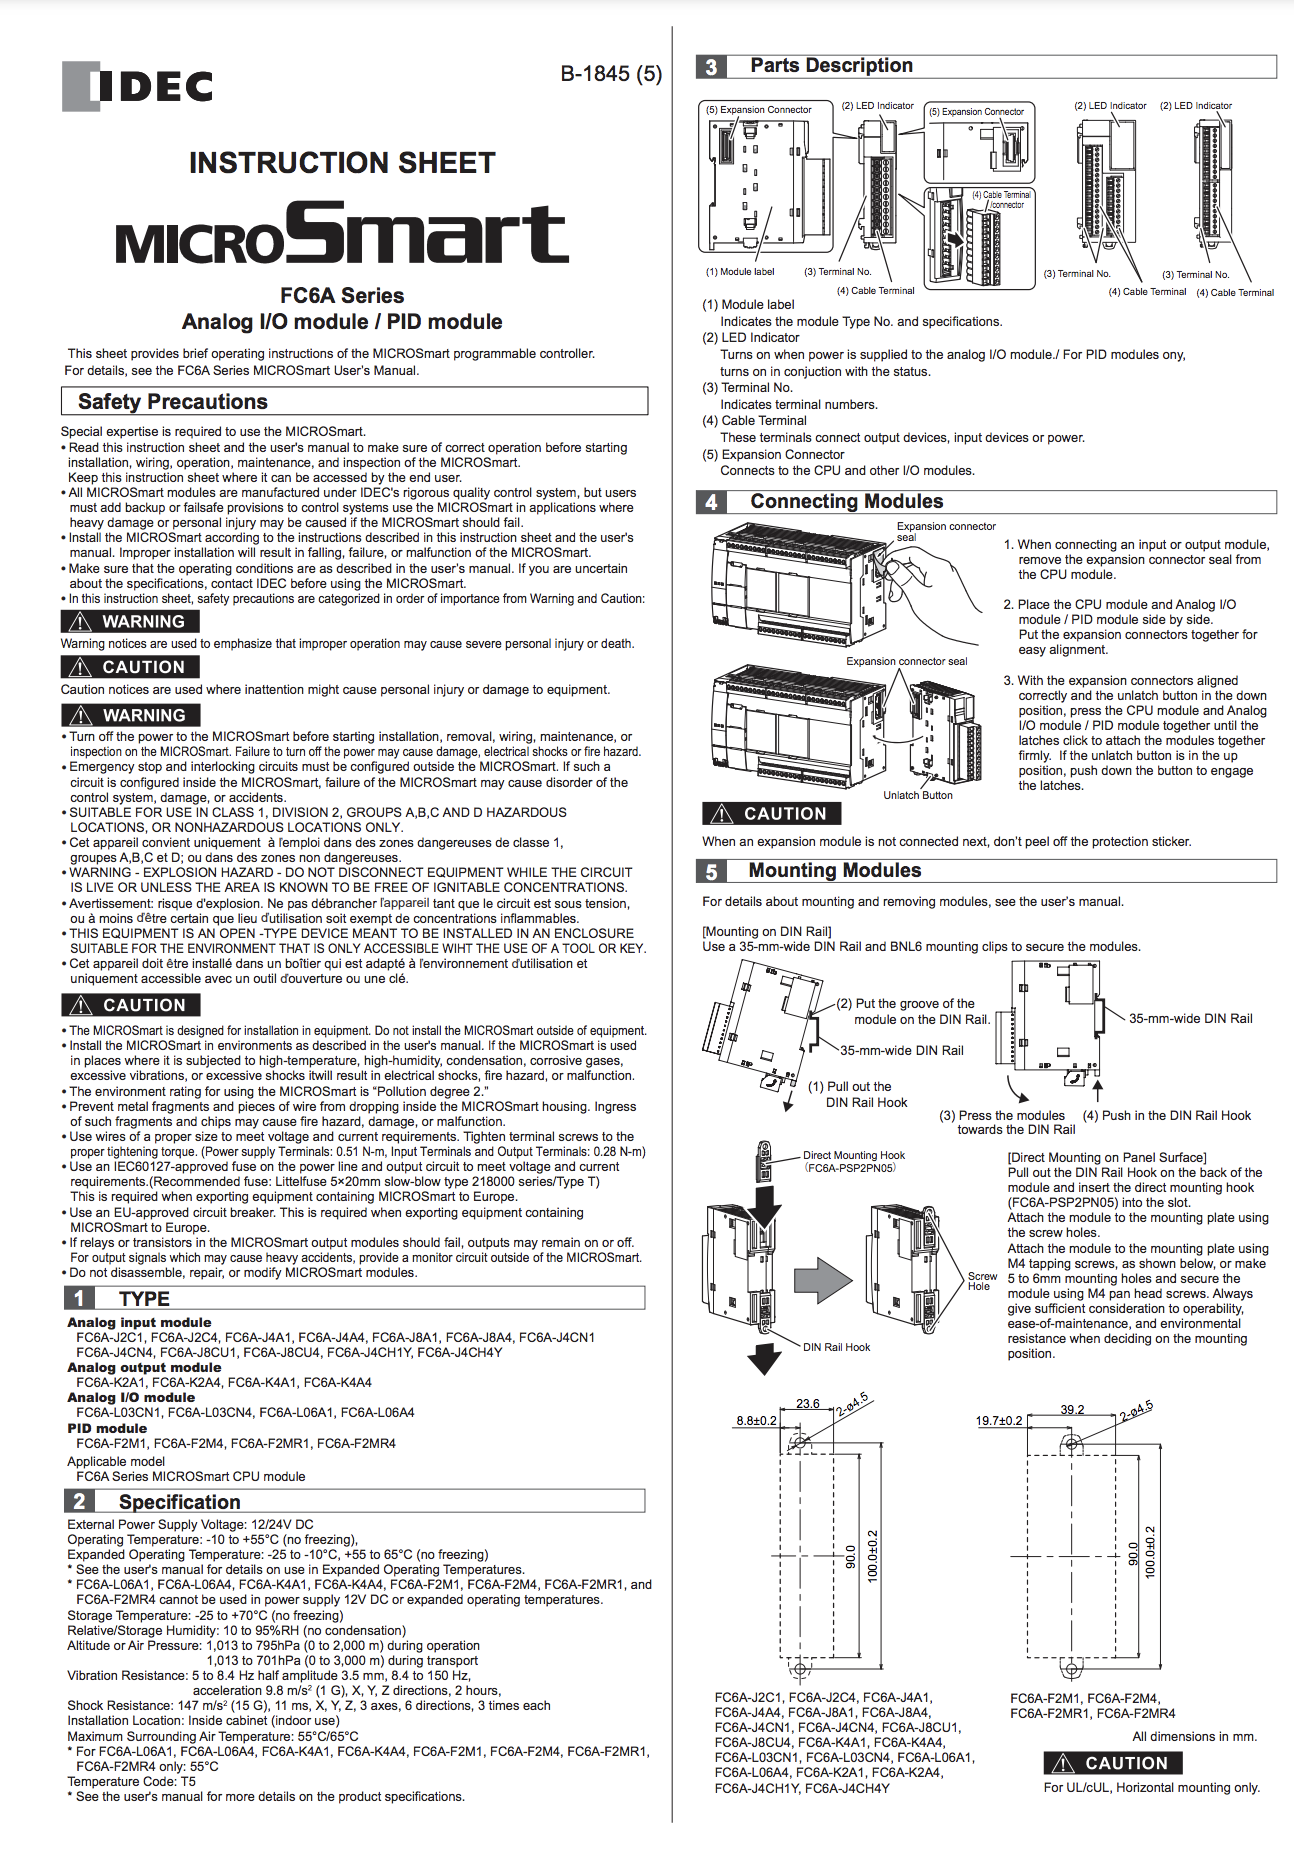 IDEC FC6A MICROSmart Functional Module (Analog / PID Module) Instruction Sheet